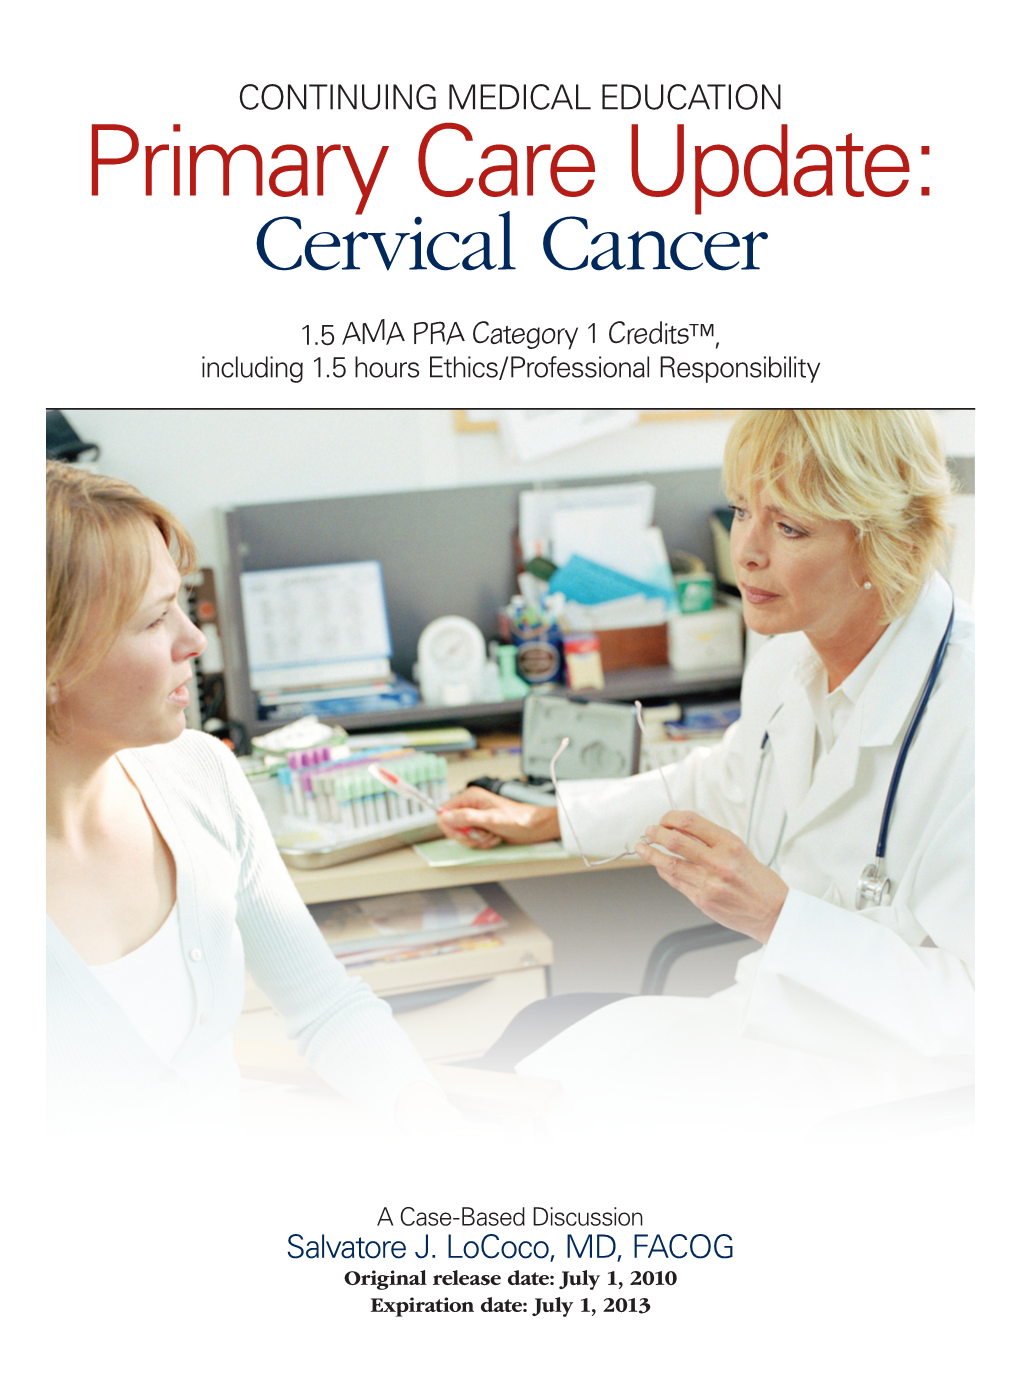 Primary Care Update: Cervical Cancer